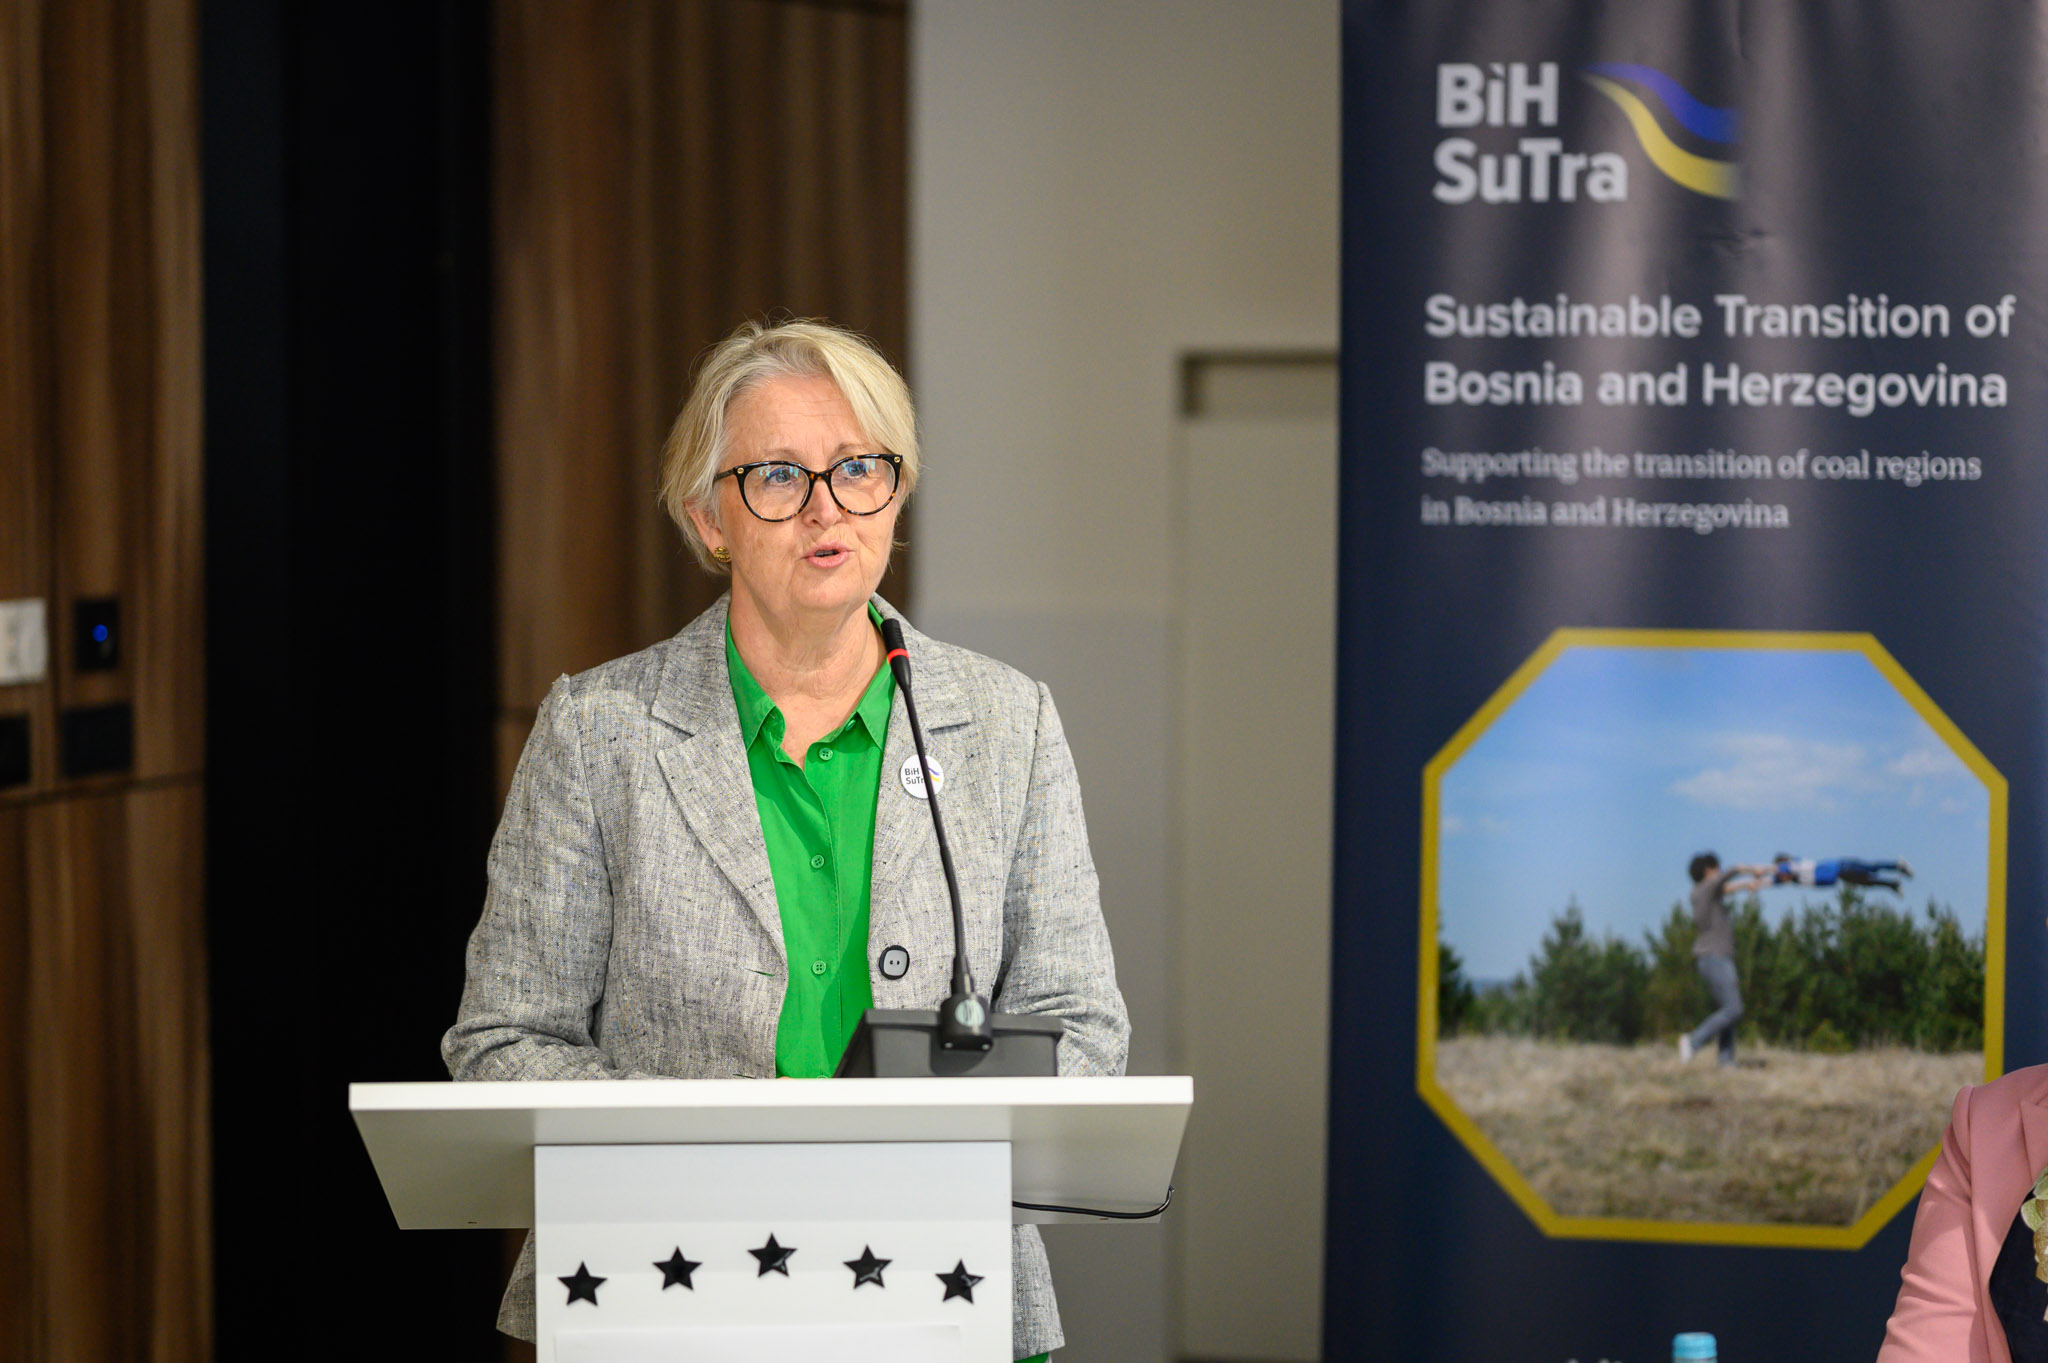 Brigitta Jansson, Deputy Head of Development Cooperation, Embassy of Sweden in Sarajevo